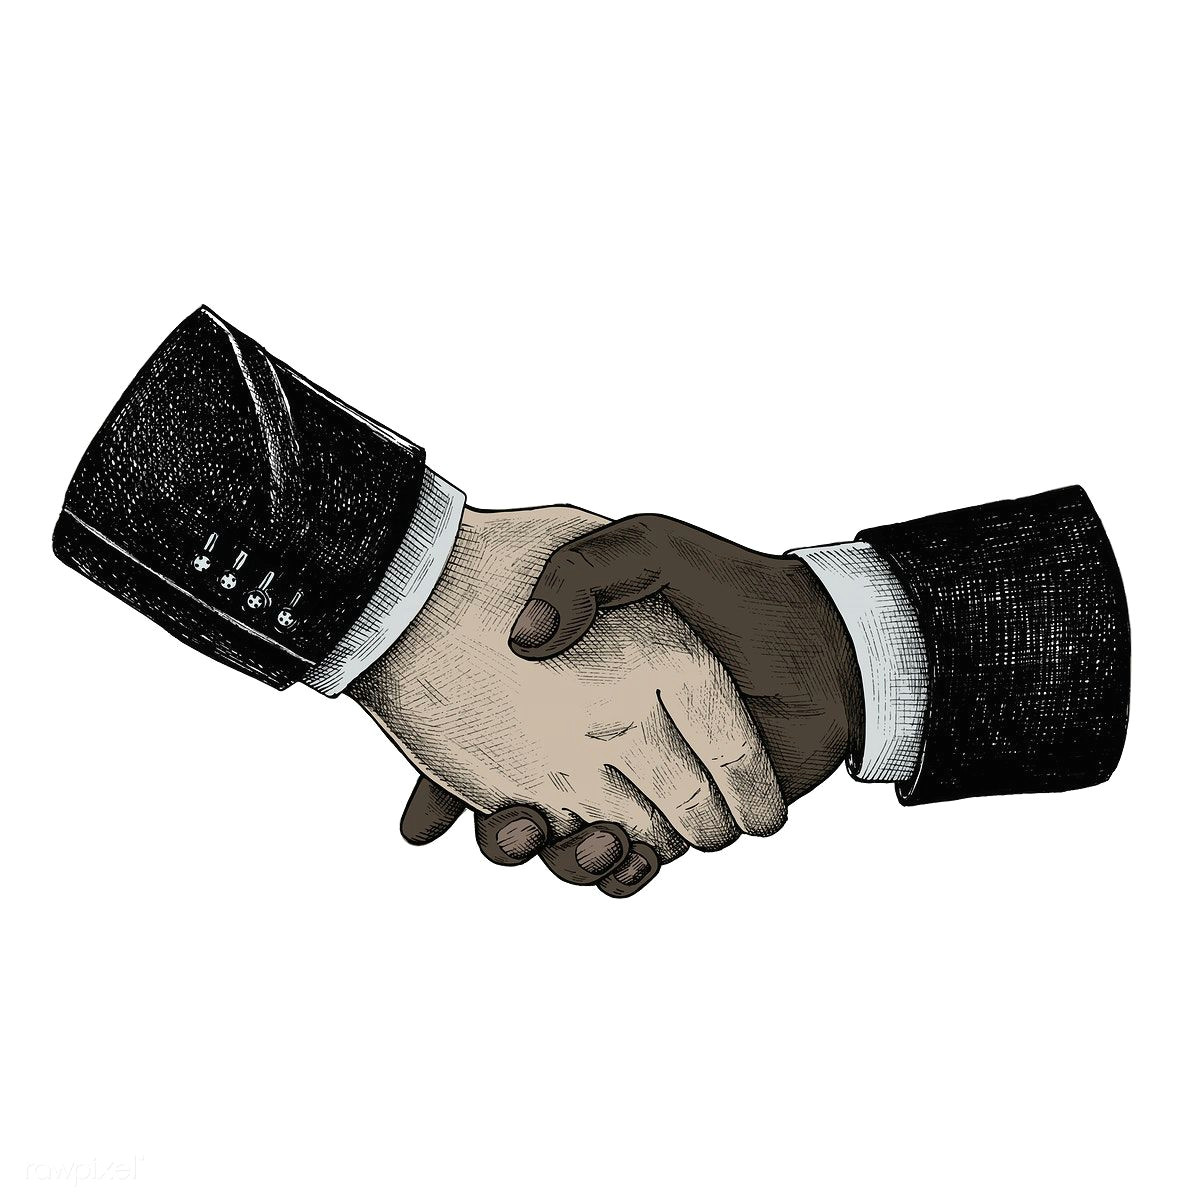 Drawings Of A Handshake Hand Drawn International Business Handshake Premium Image by